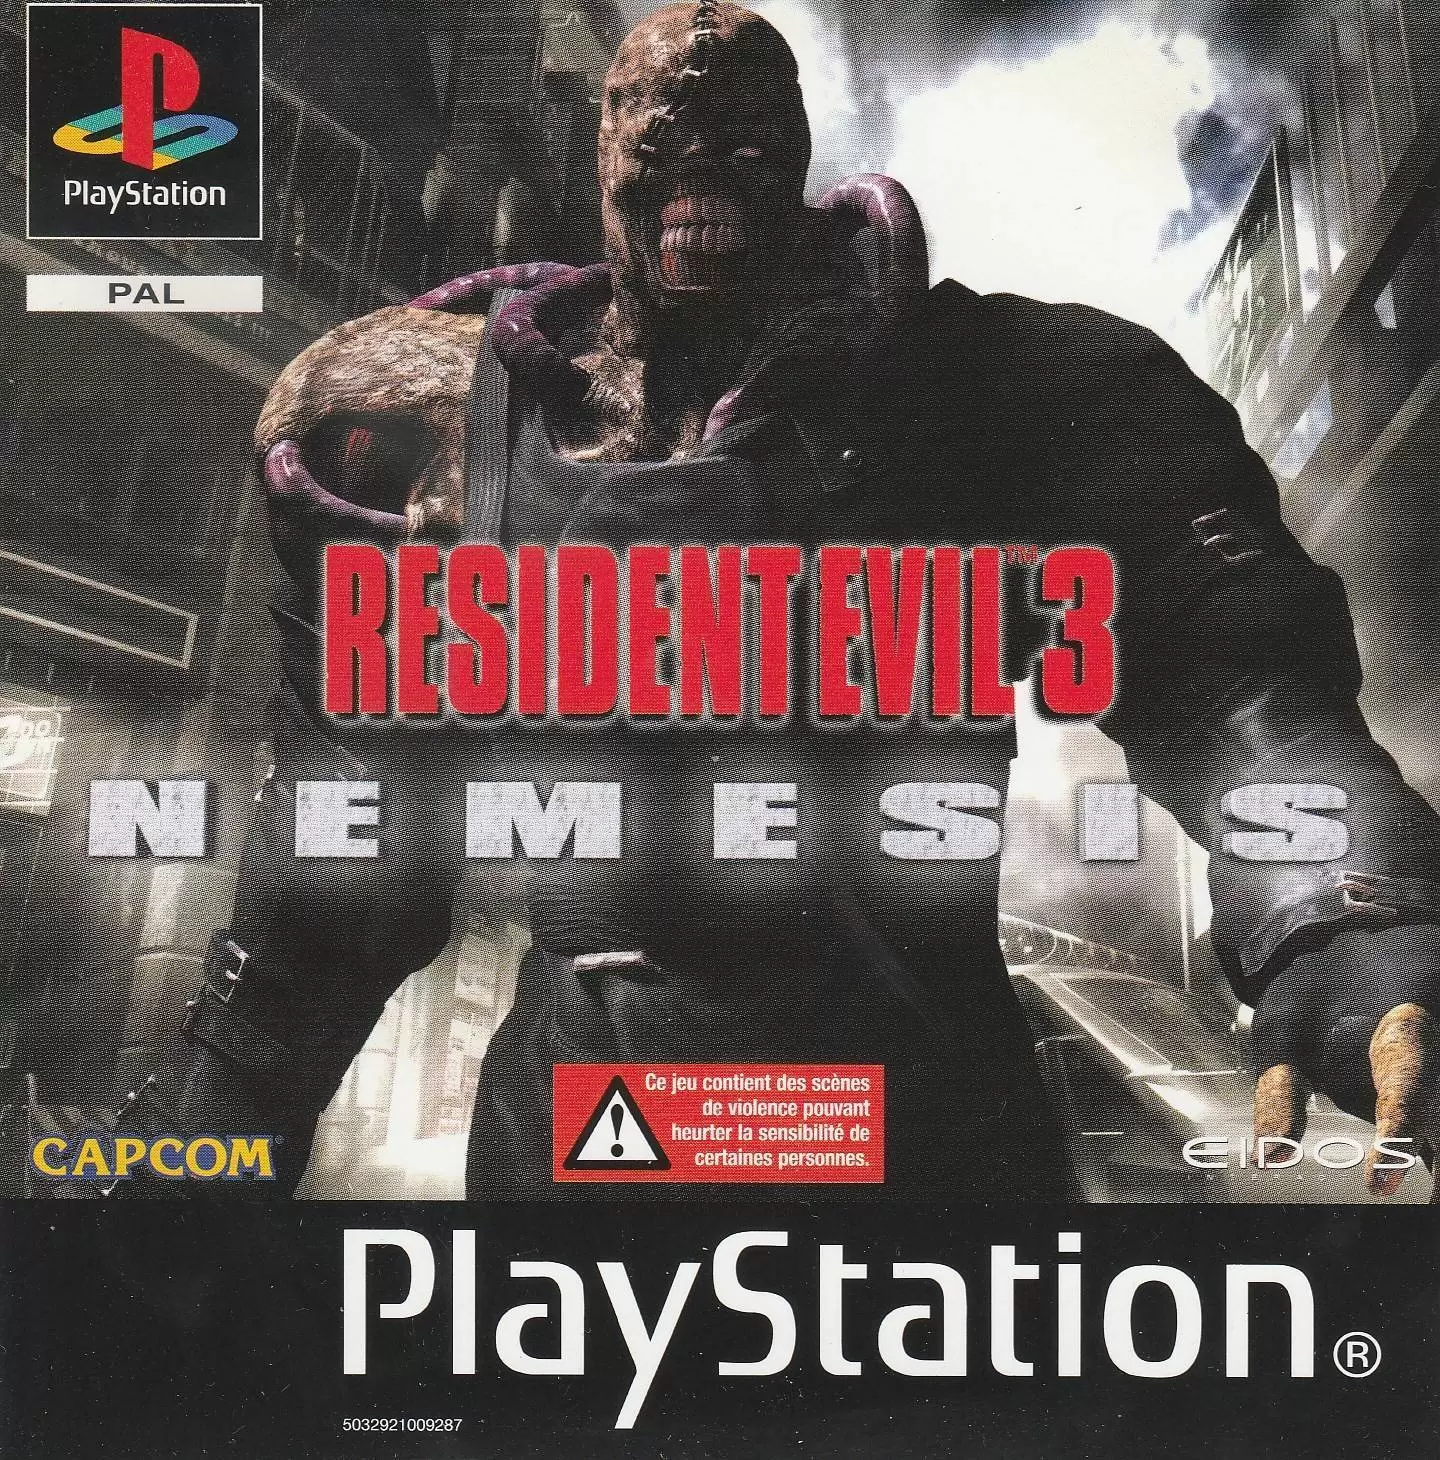 Playstation games - Resident Evil 3 - Nemesis